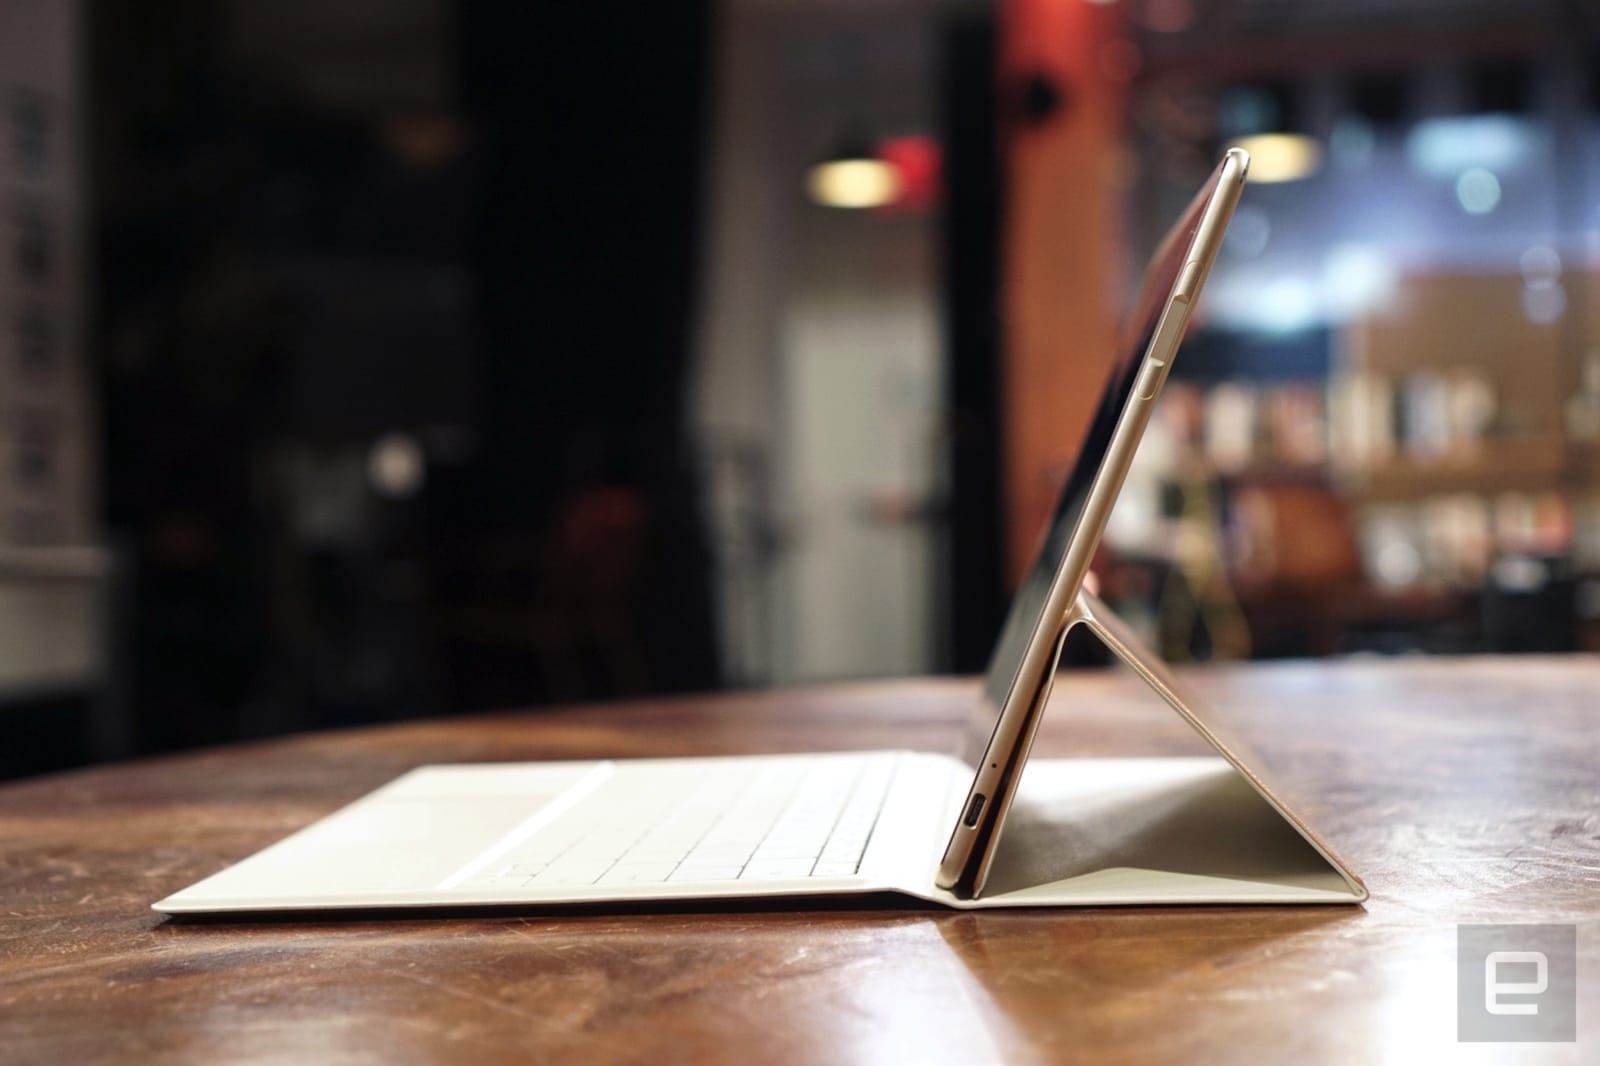 Huawei's MateBook is beautiful, but fundamentally flawed | Engadget